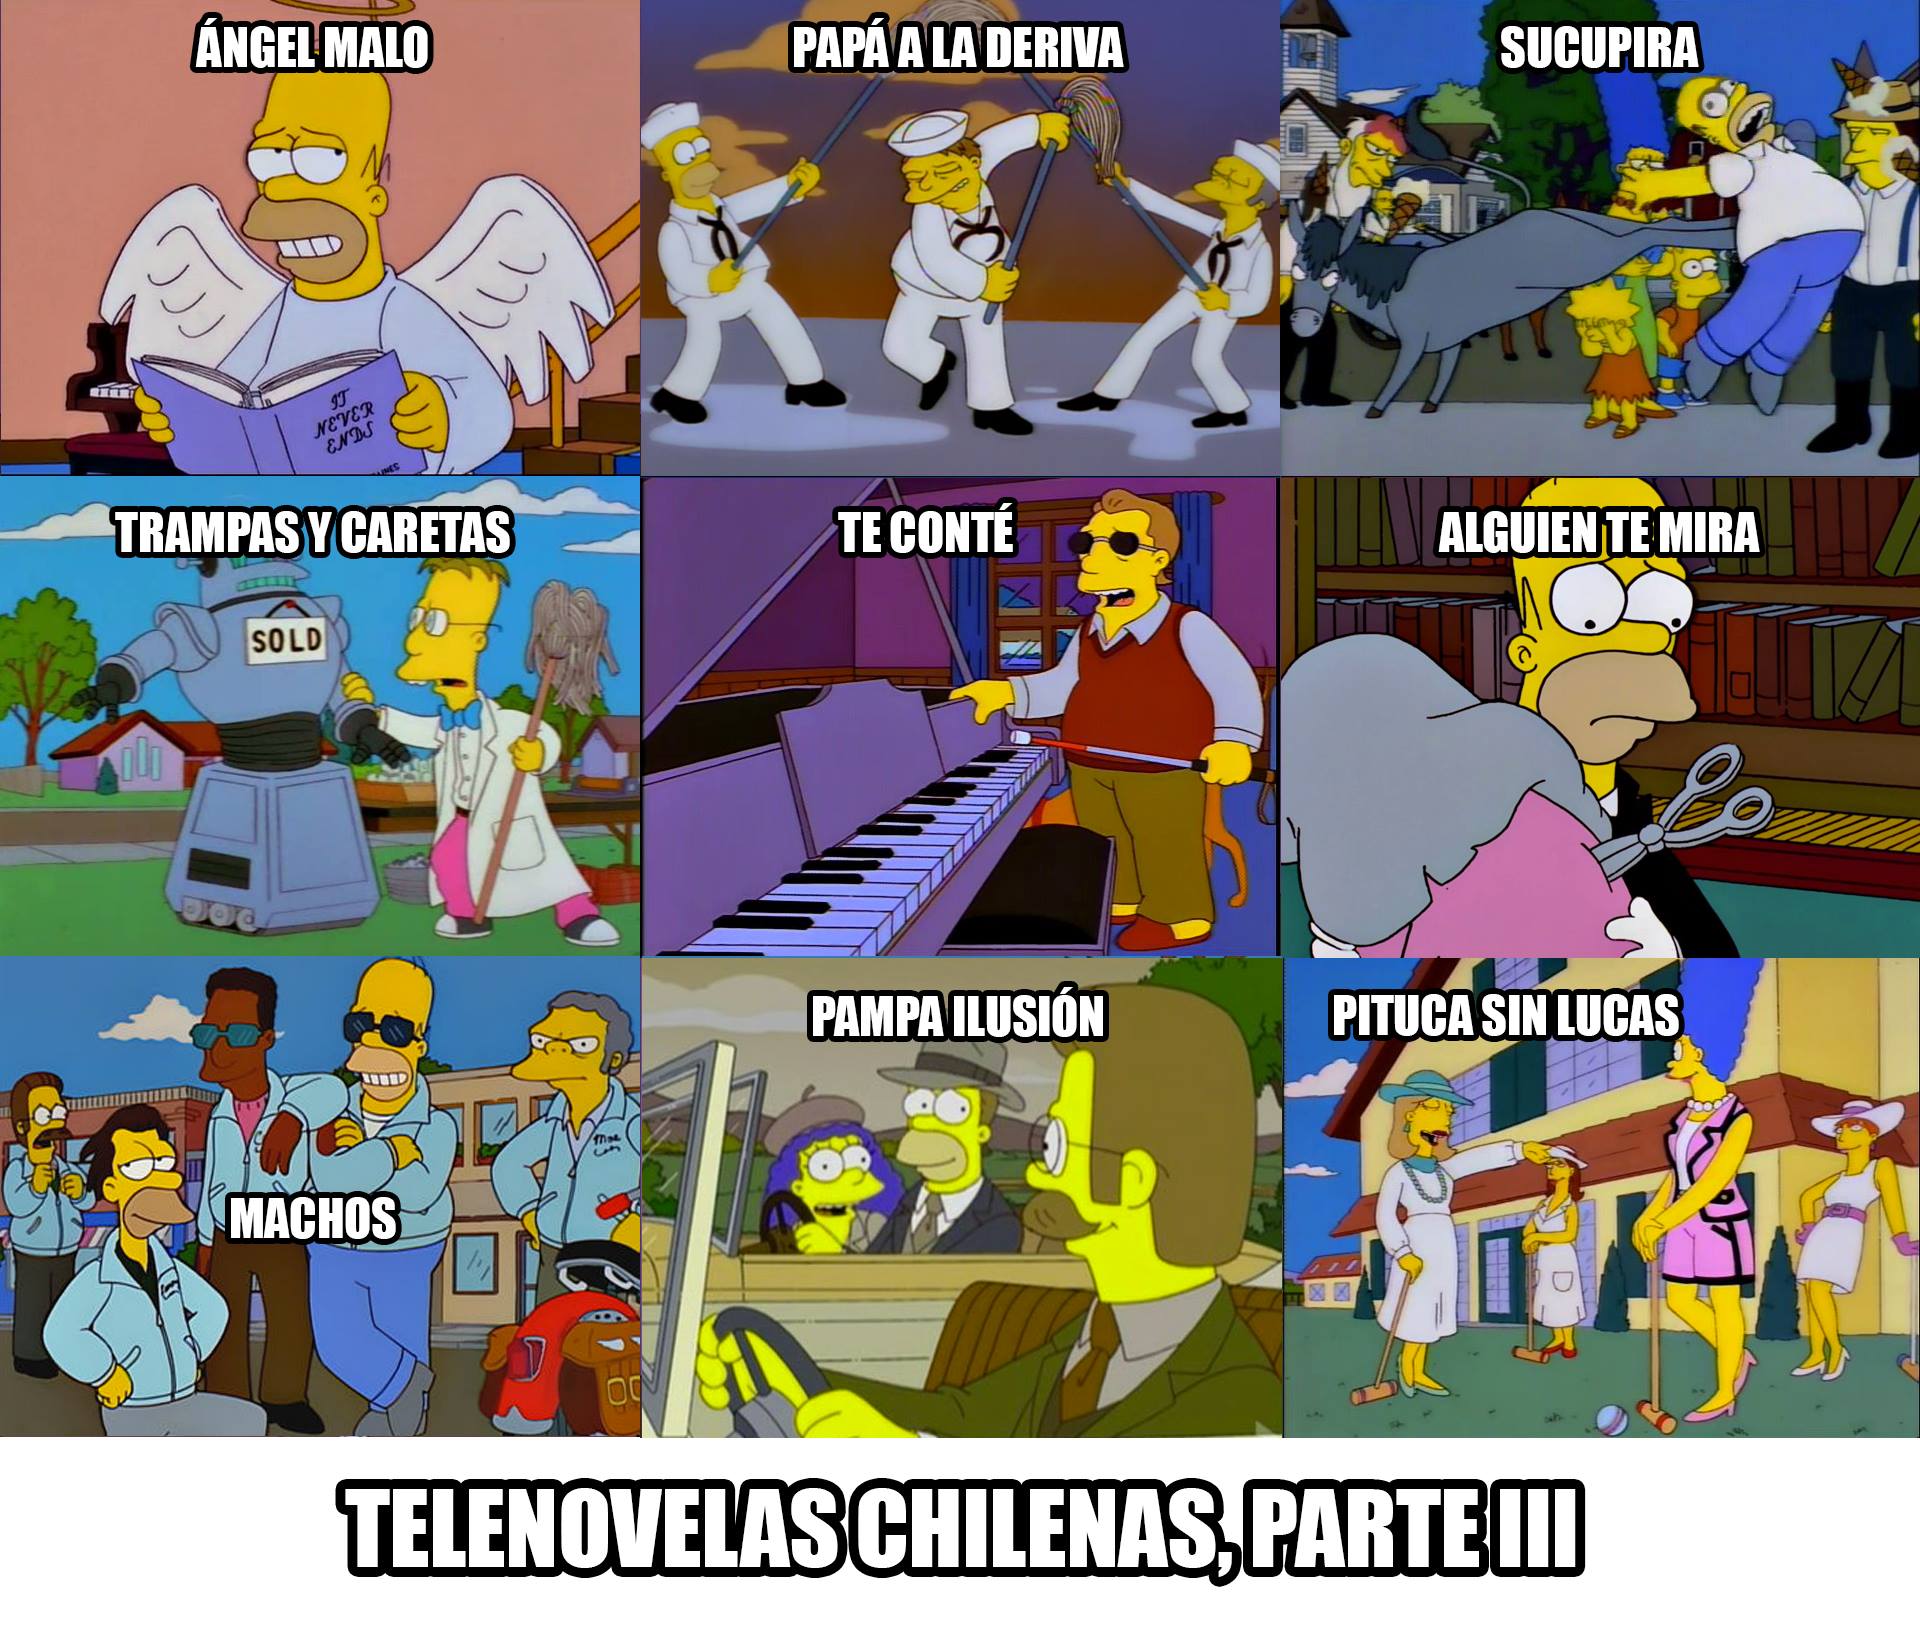 Fan page "Los Simpsons chilenos".